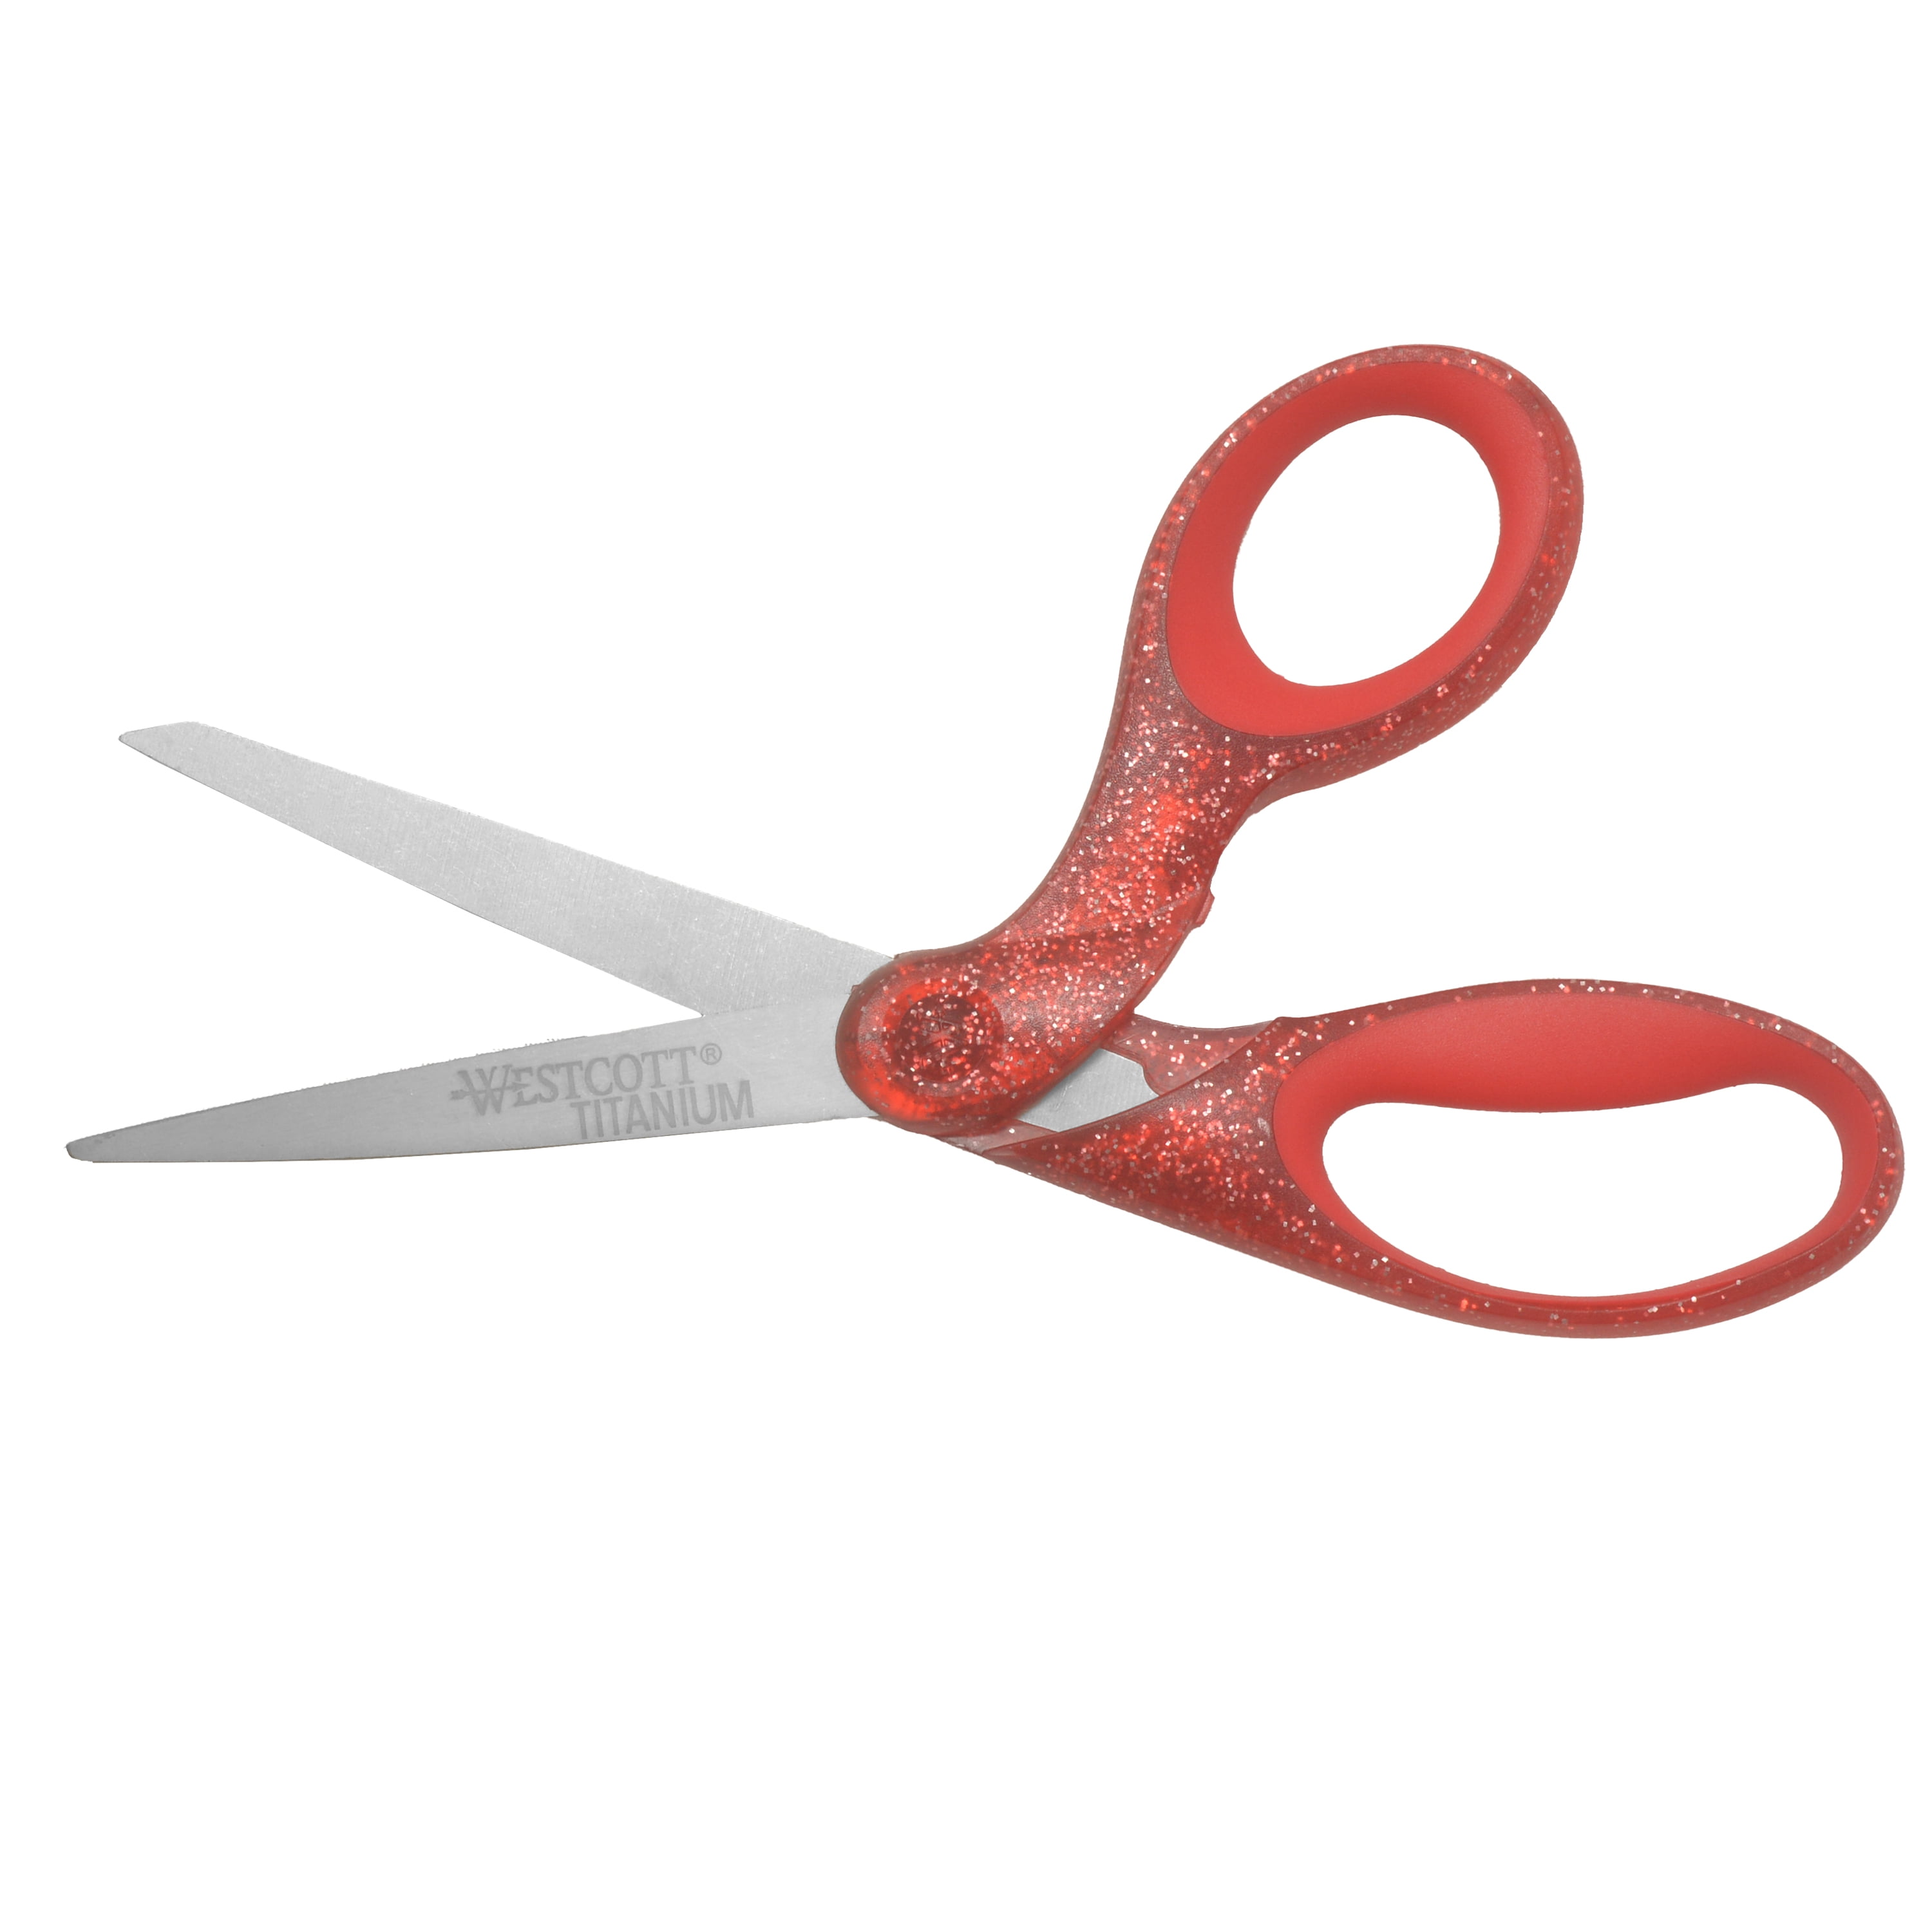 Gourmet Pens: Shoplet.com Review: Westcott Titanium Scissors & Kids  Scissors & Scissors Mouse